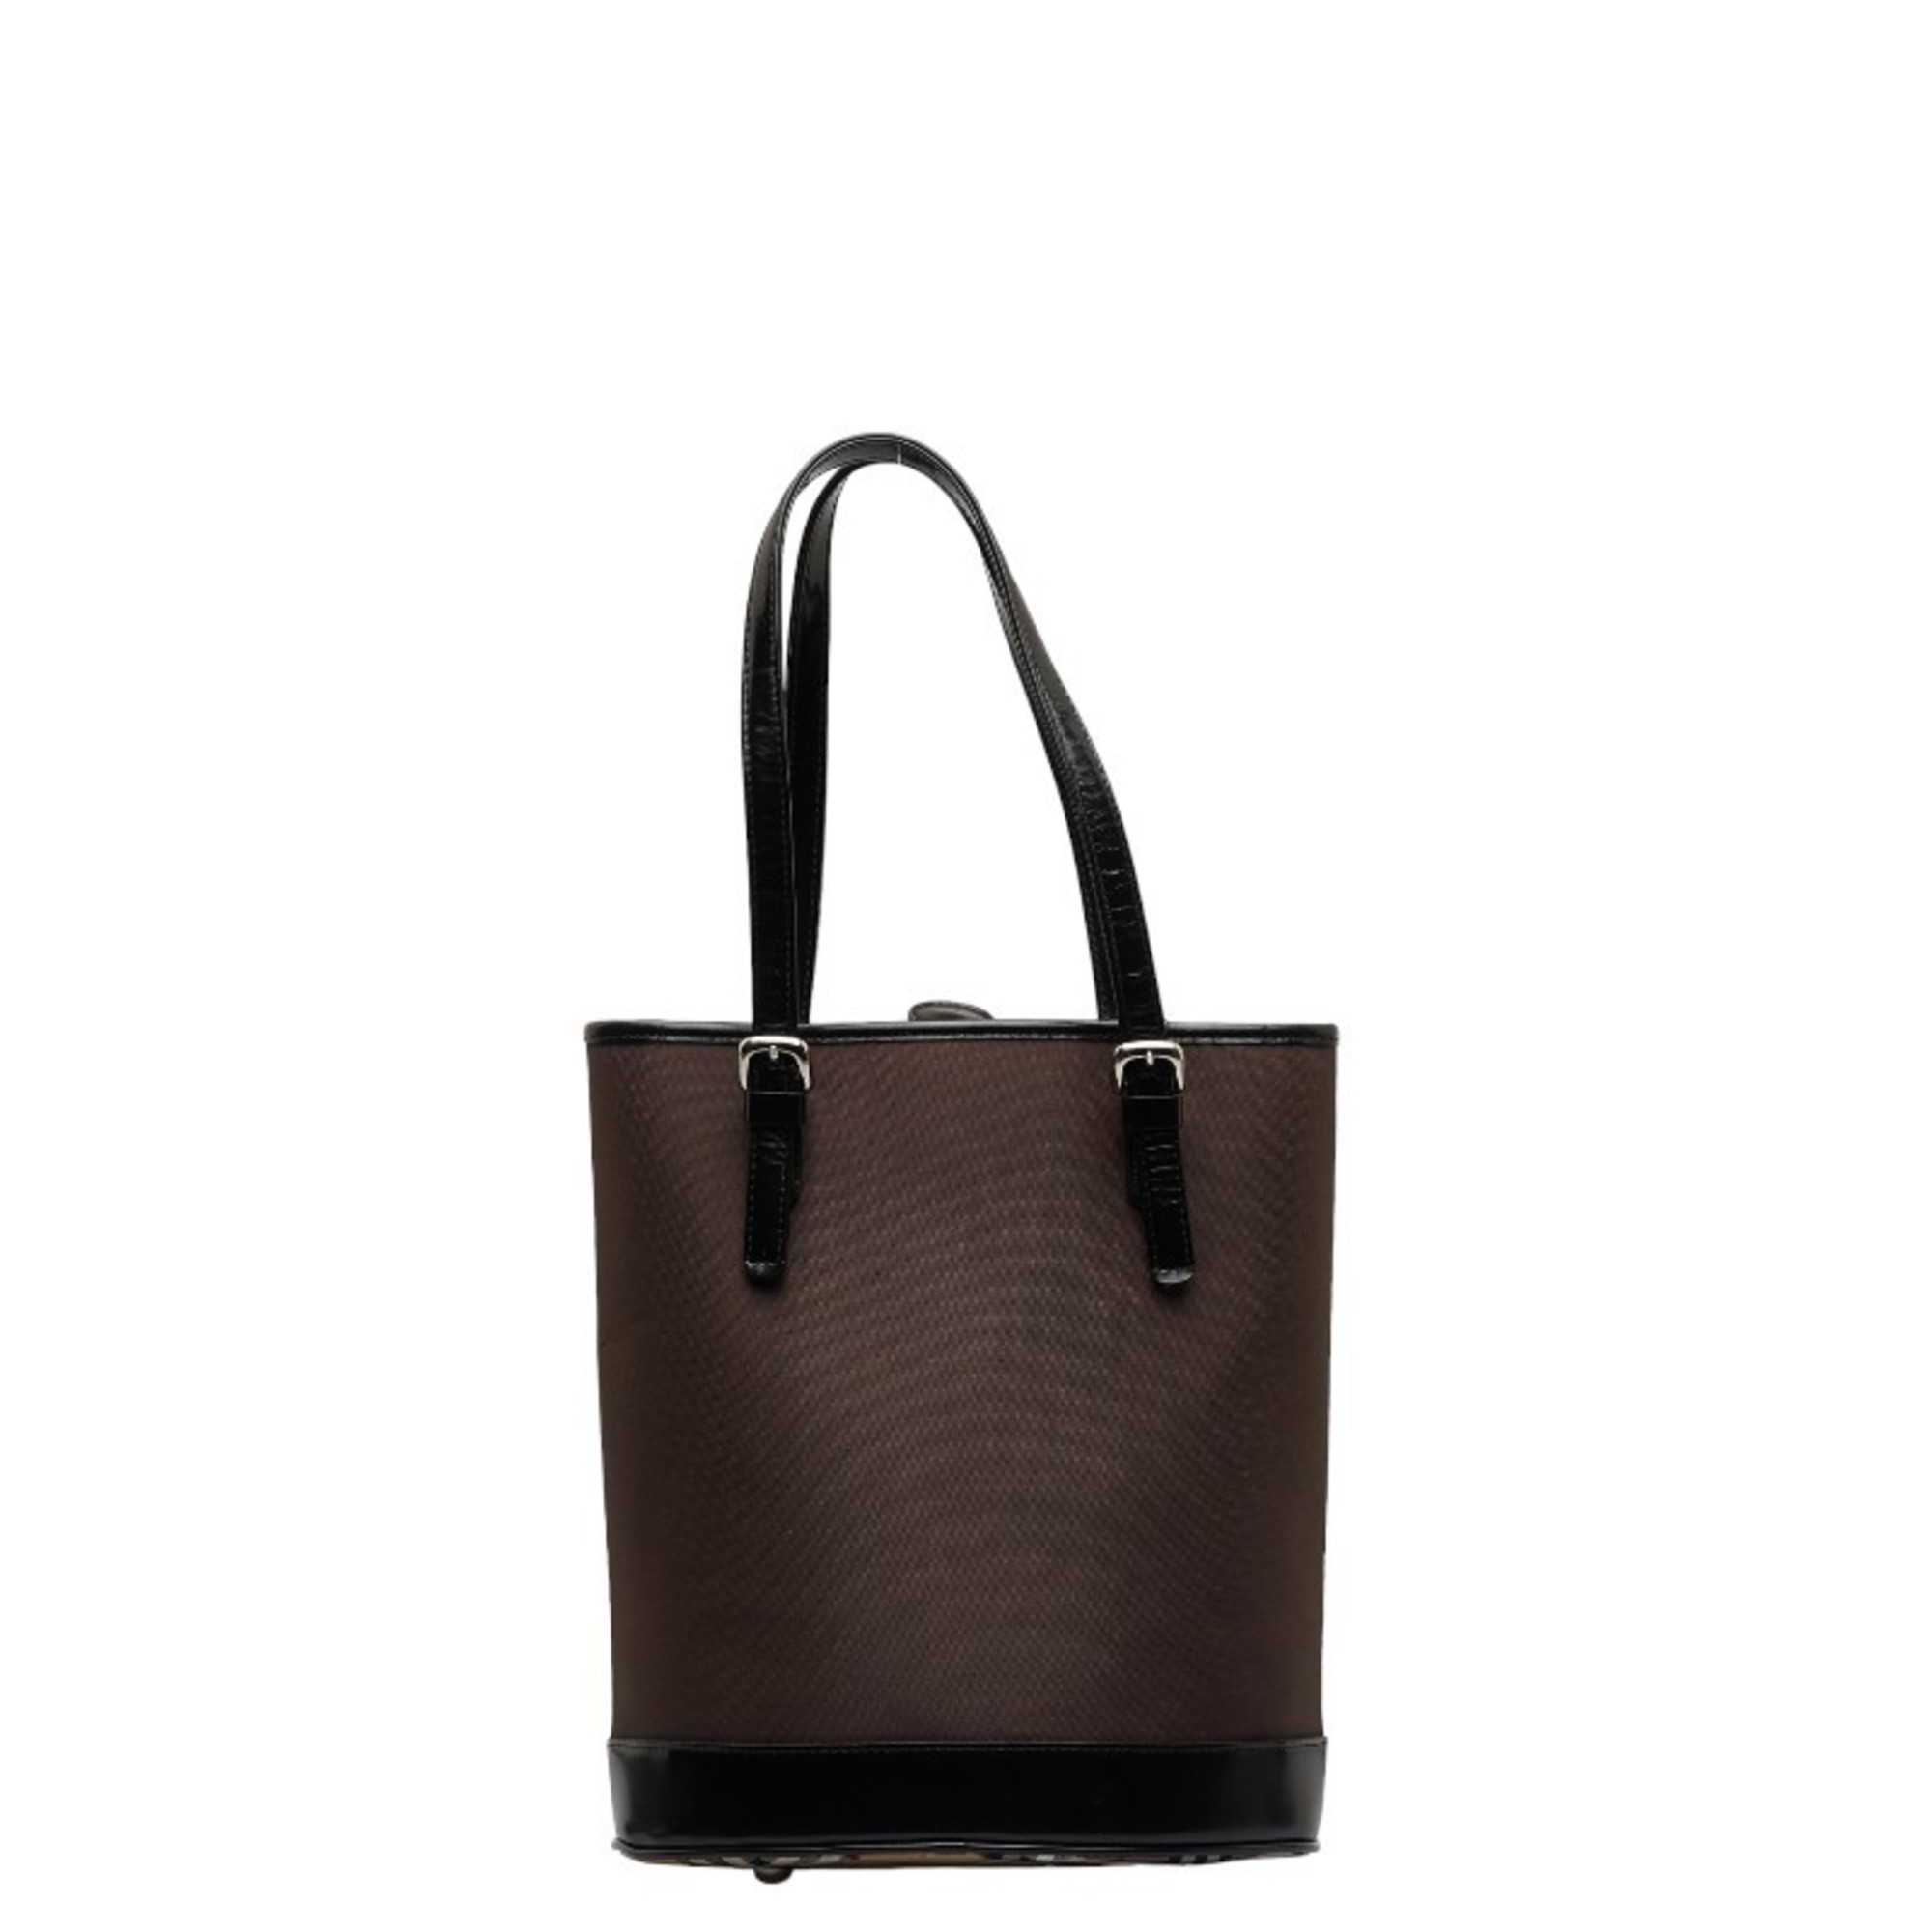 Burberry Nova Check Handbag Tote Bag Brown Black Nylon Leather Women's BURBERRY